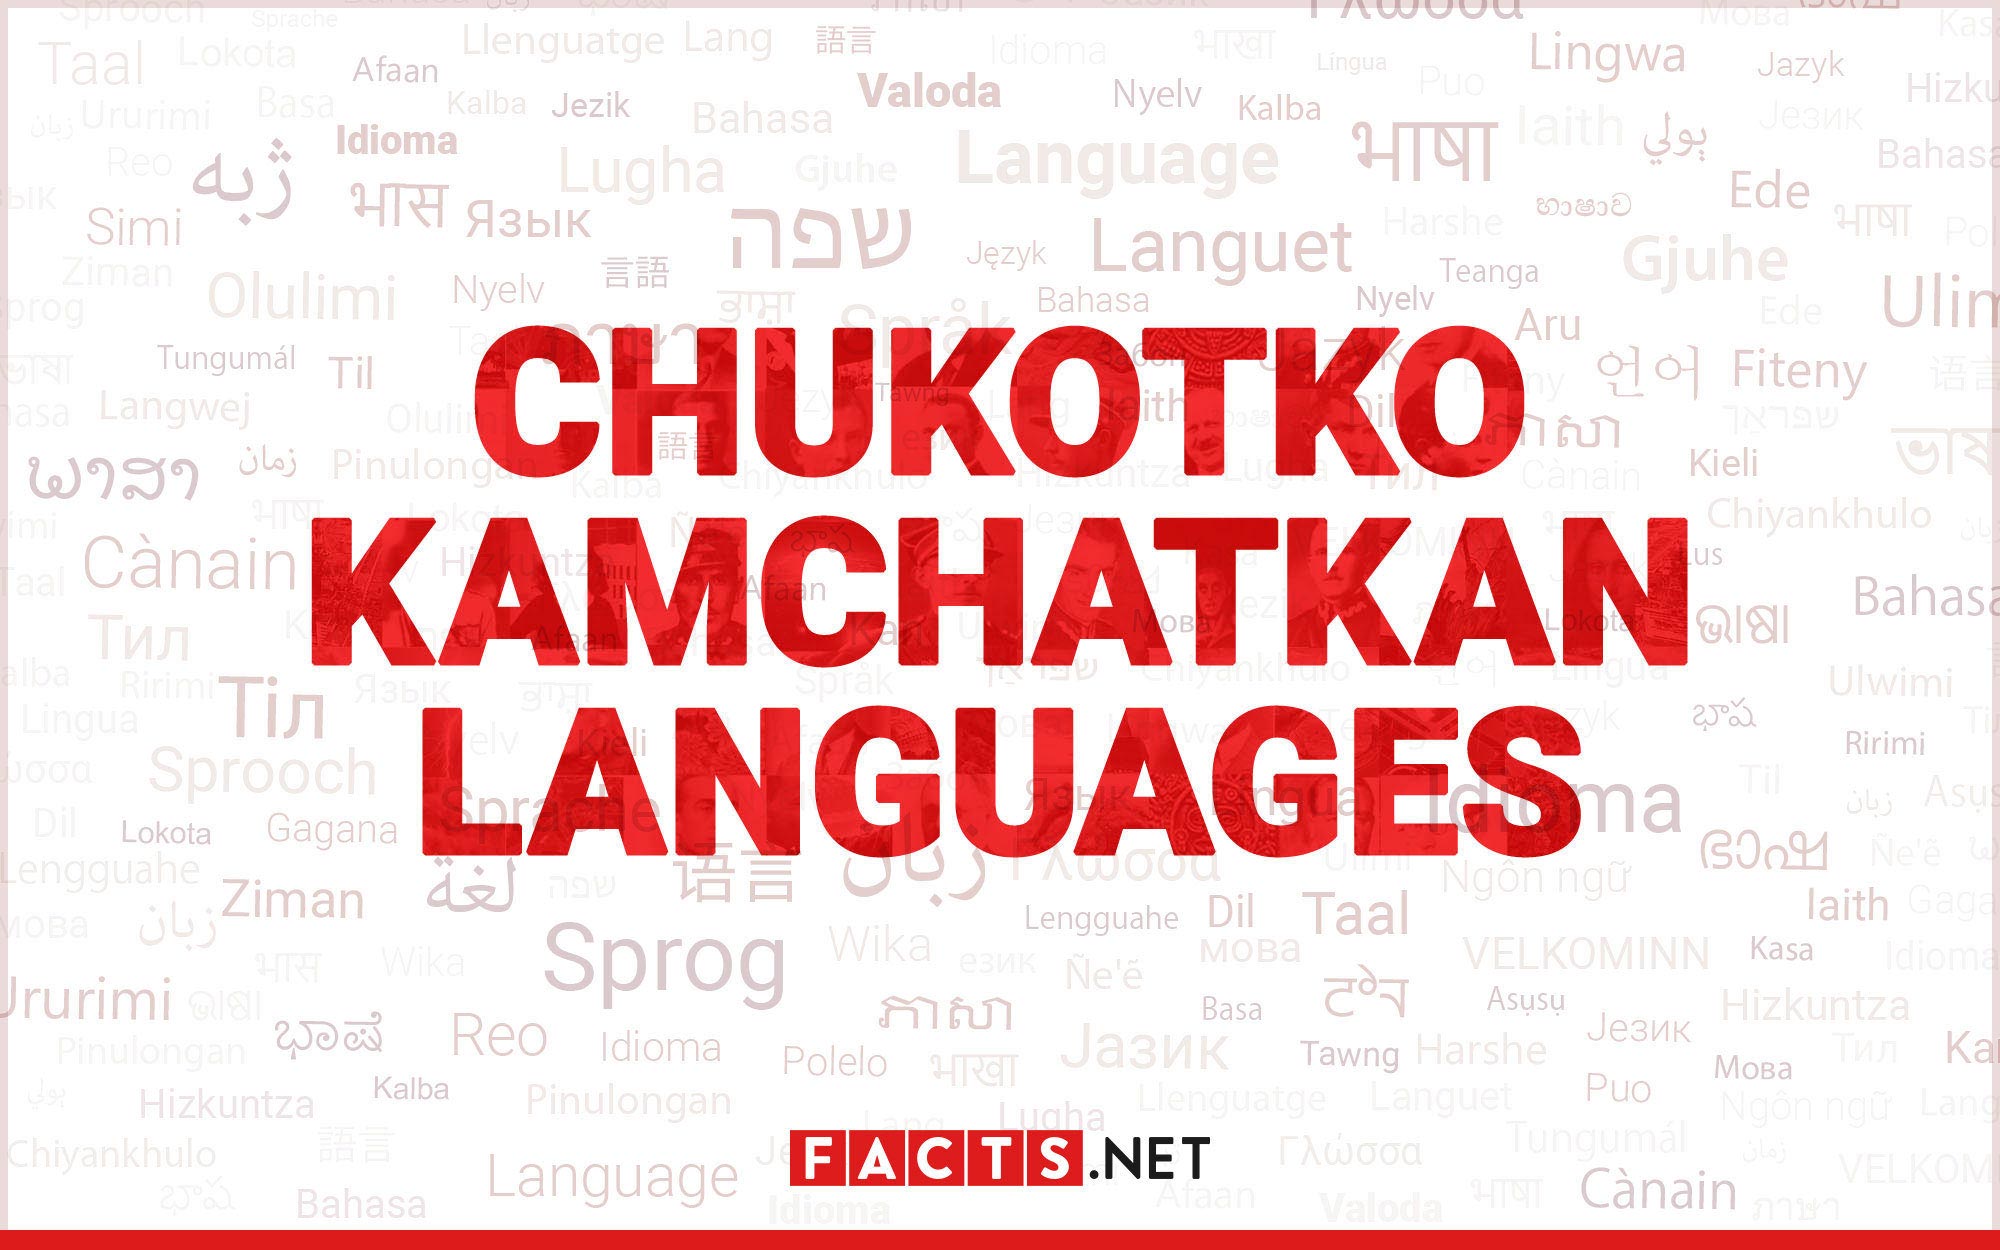 15-extraordinary-facts-about-chukotko-kamchatkan-languages